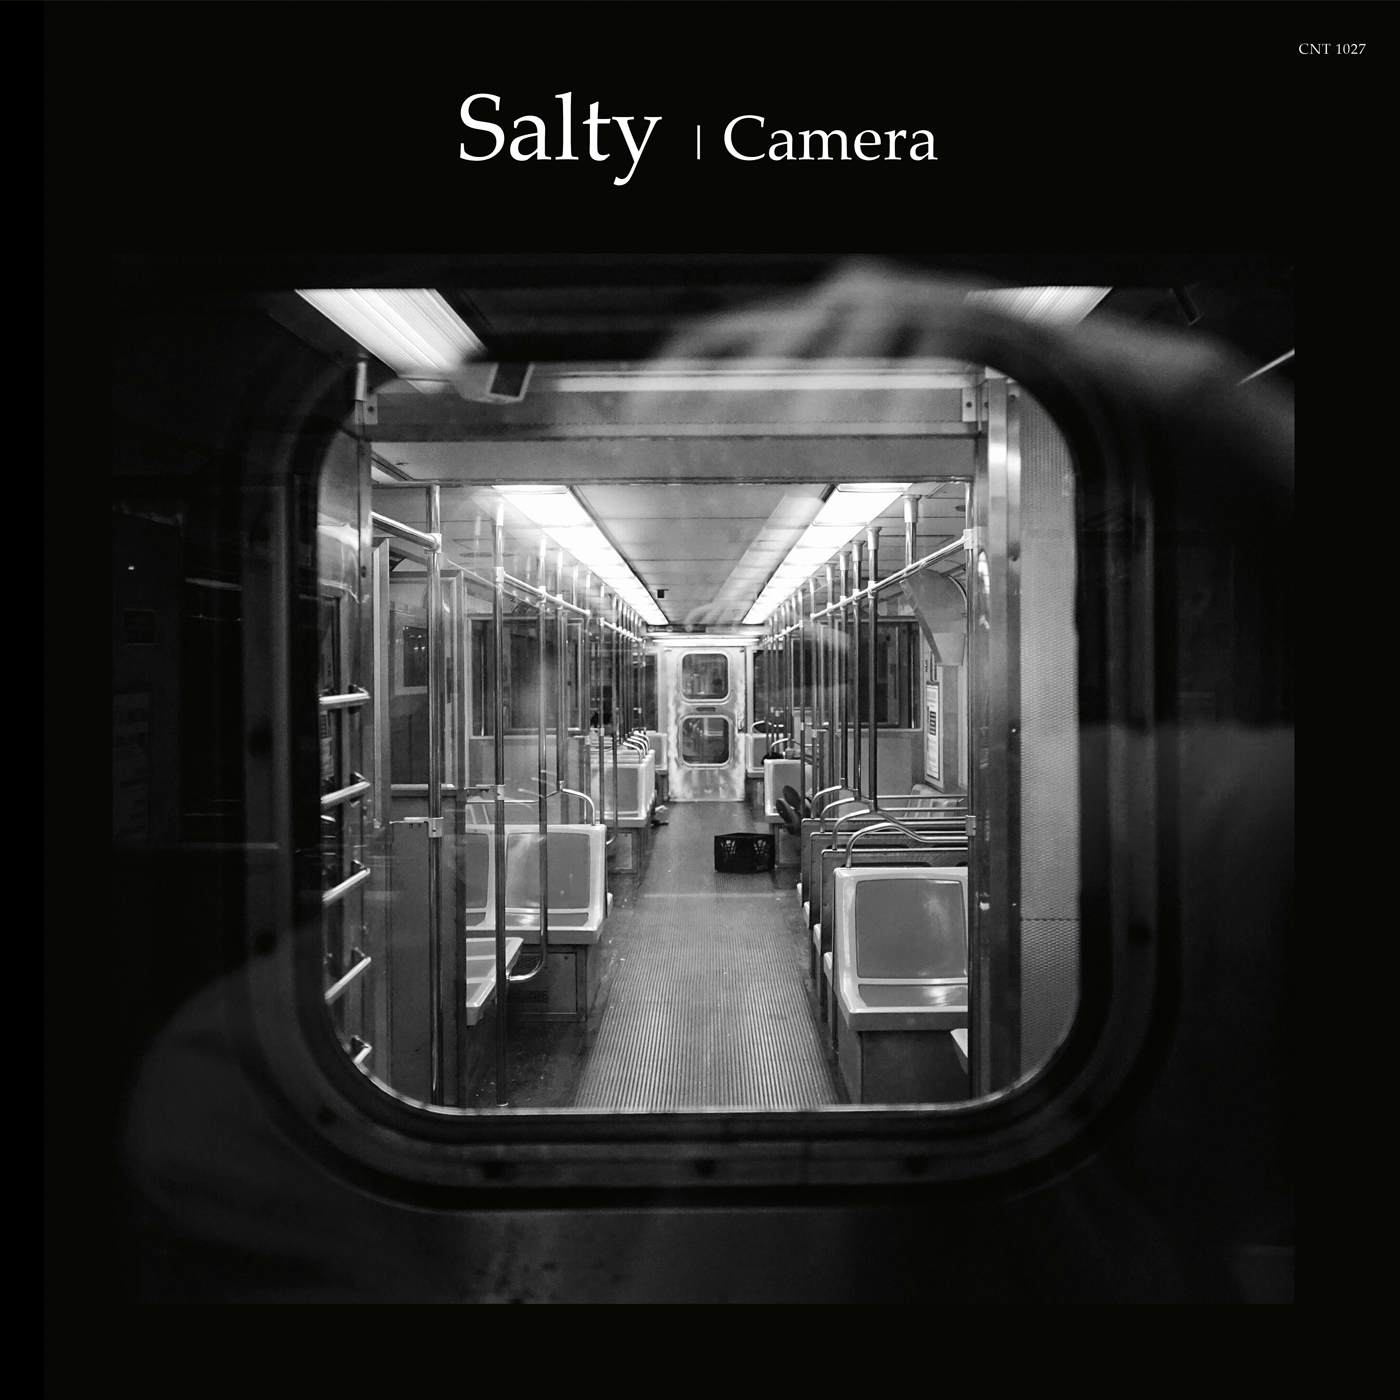 Salty Camera Vinyl Record